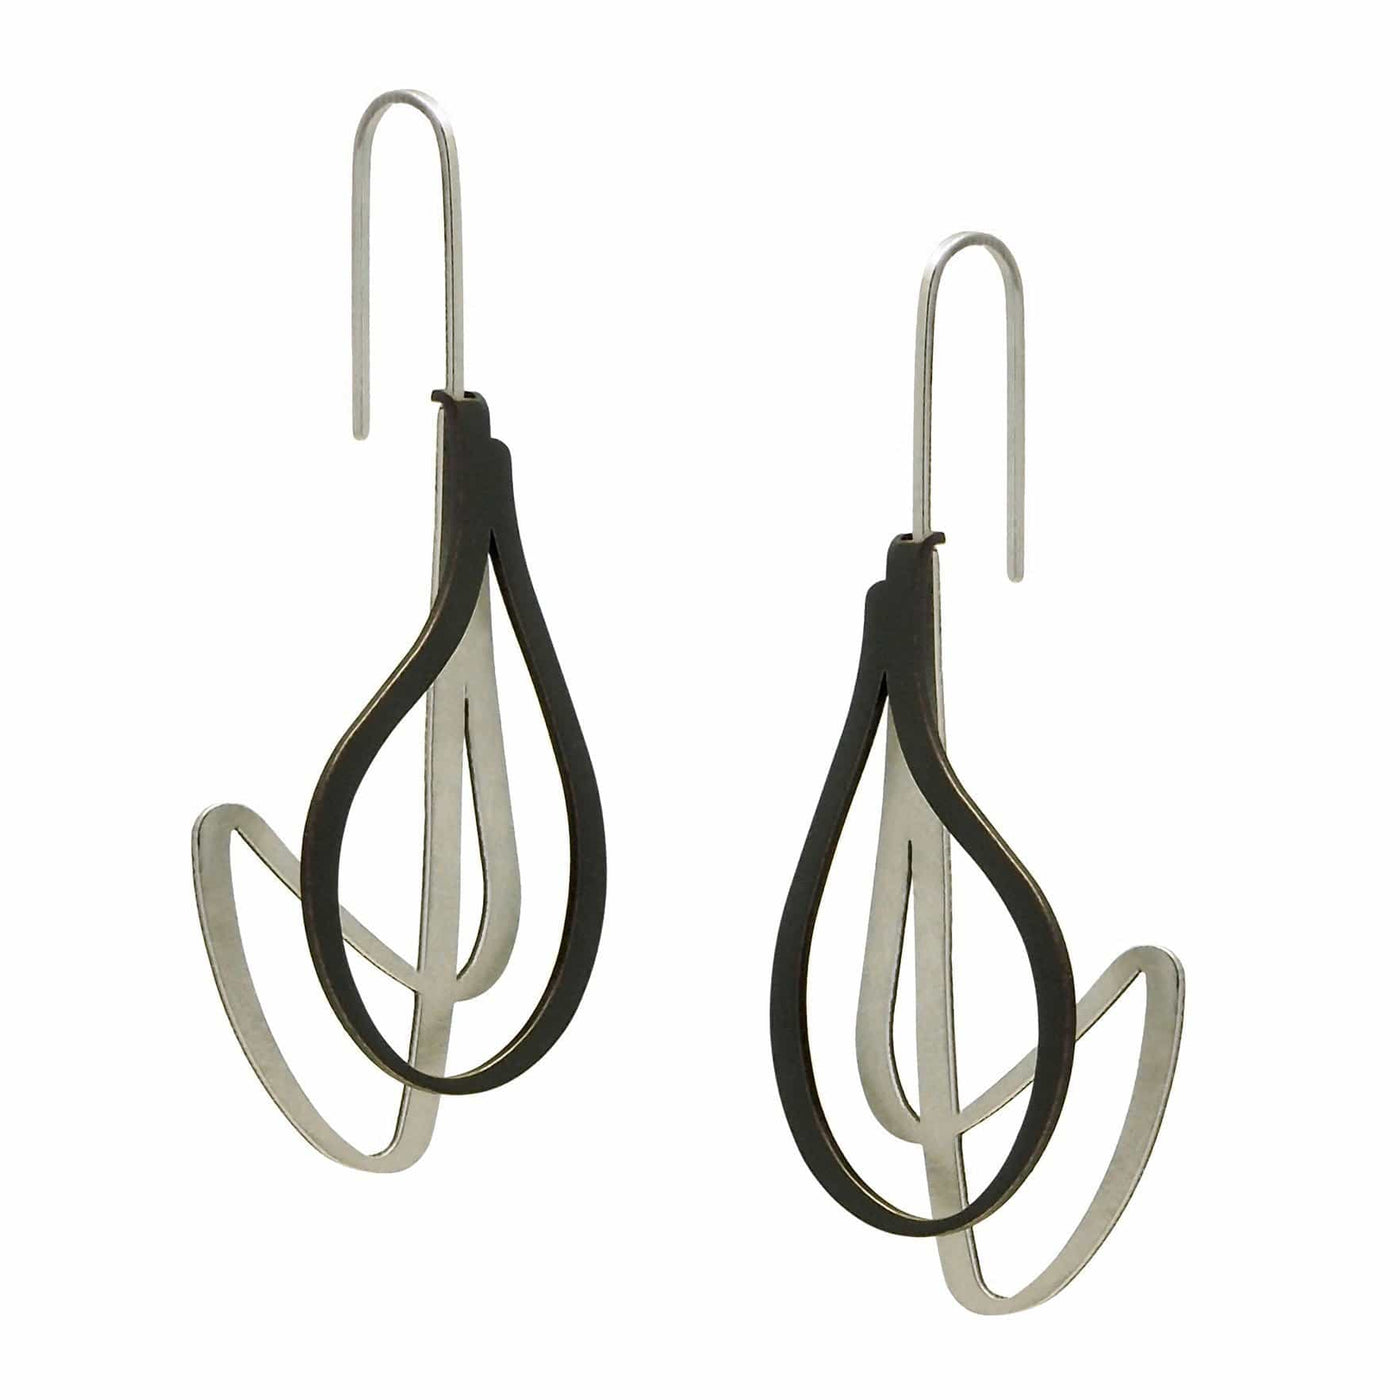 X2 Twist Earrings - Gold/ Black - inSync design